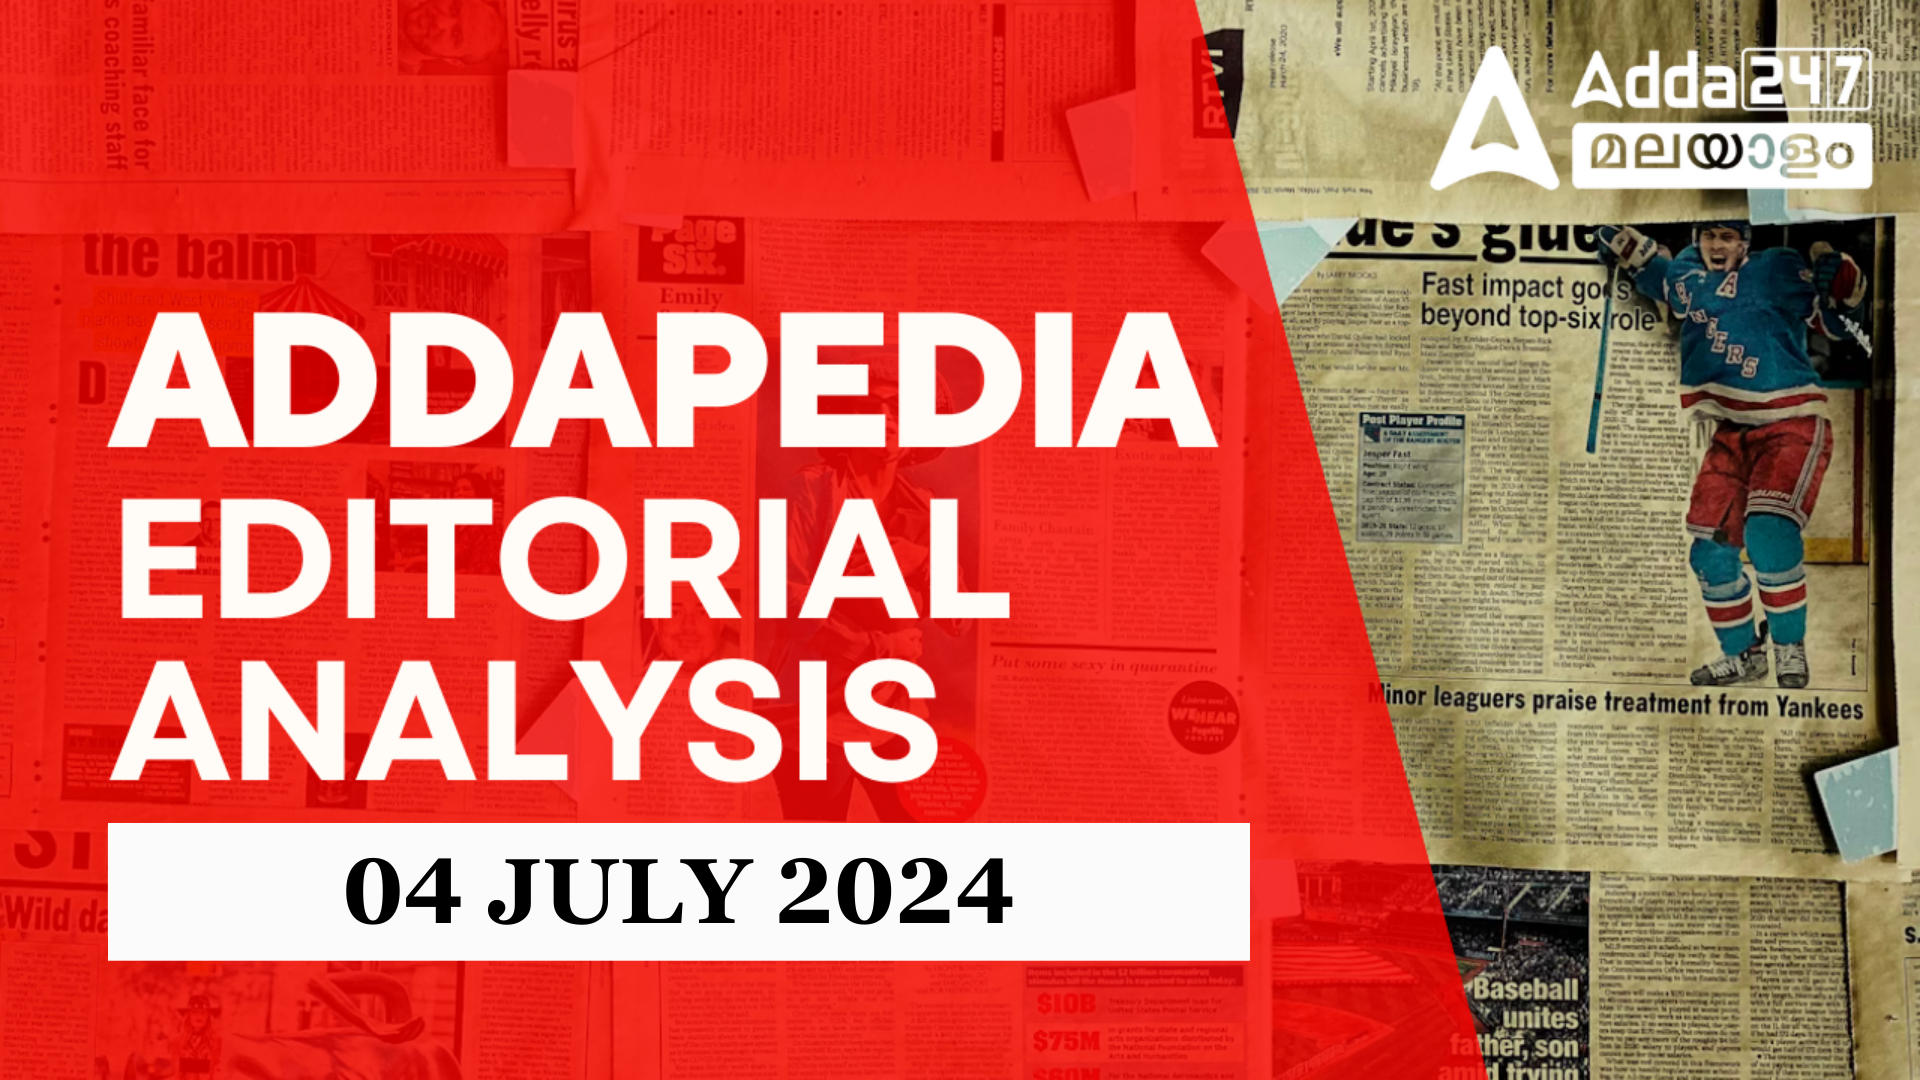 Addapedia Editorial Analysis: Daily News Editorial PDF, 04 July 2024| അഡാപീഡിയ എഡിറ്റോറിയൽ അനാലിസിസ് PDF